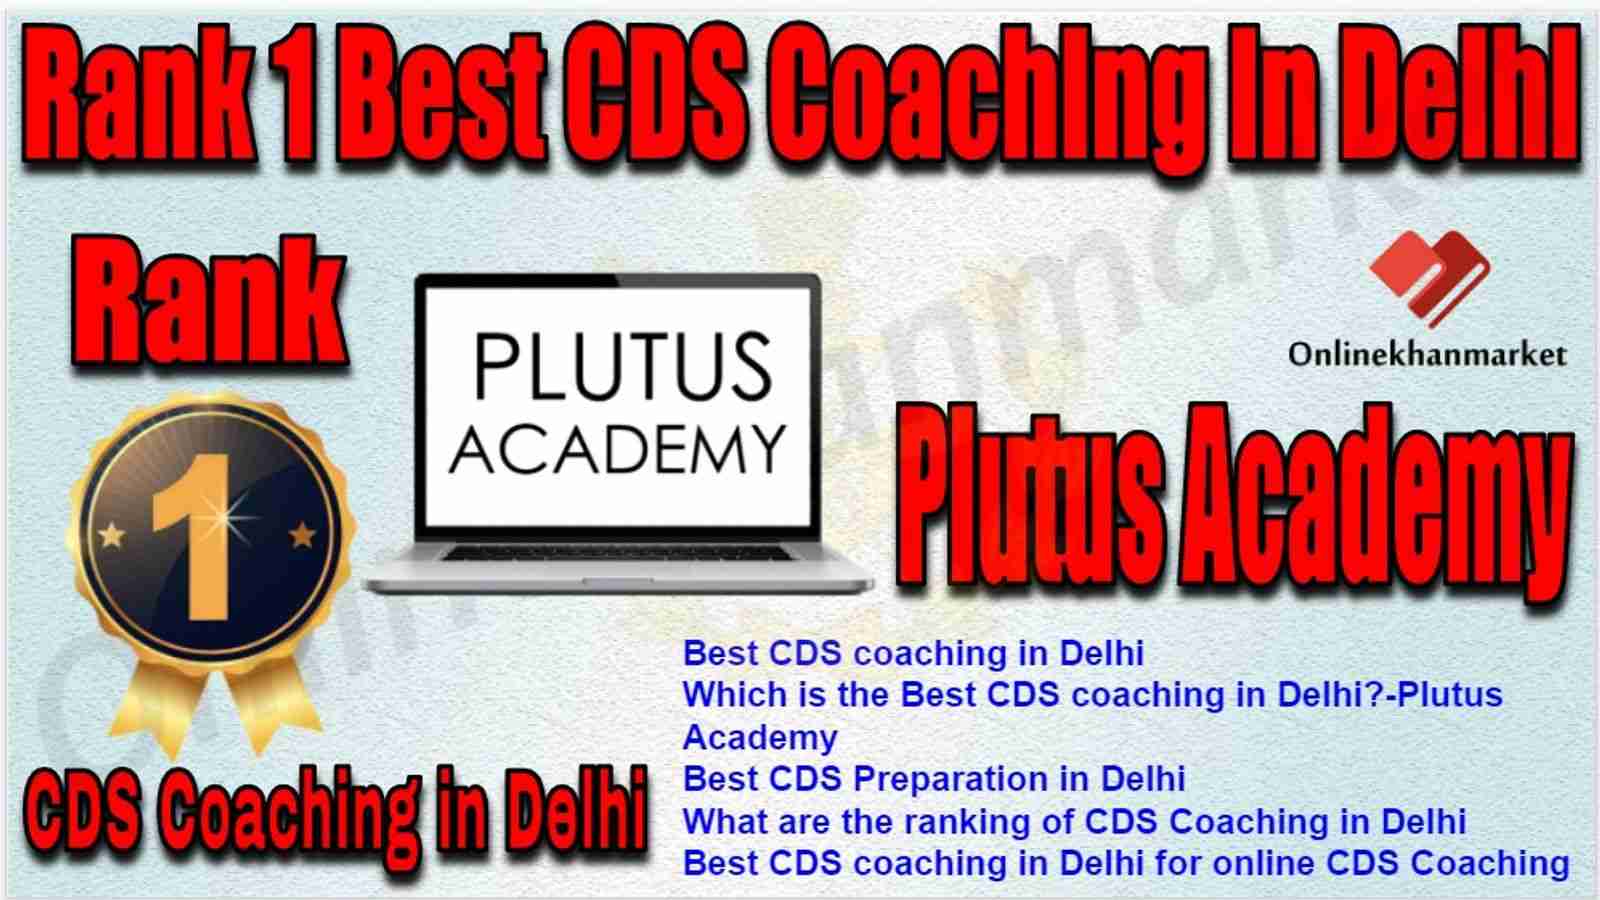 Rank 1Top CDS Coaching in Delhi